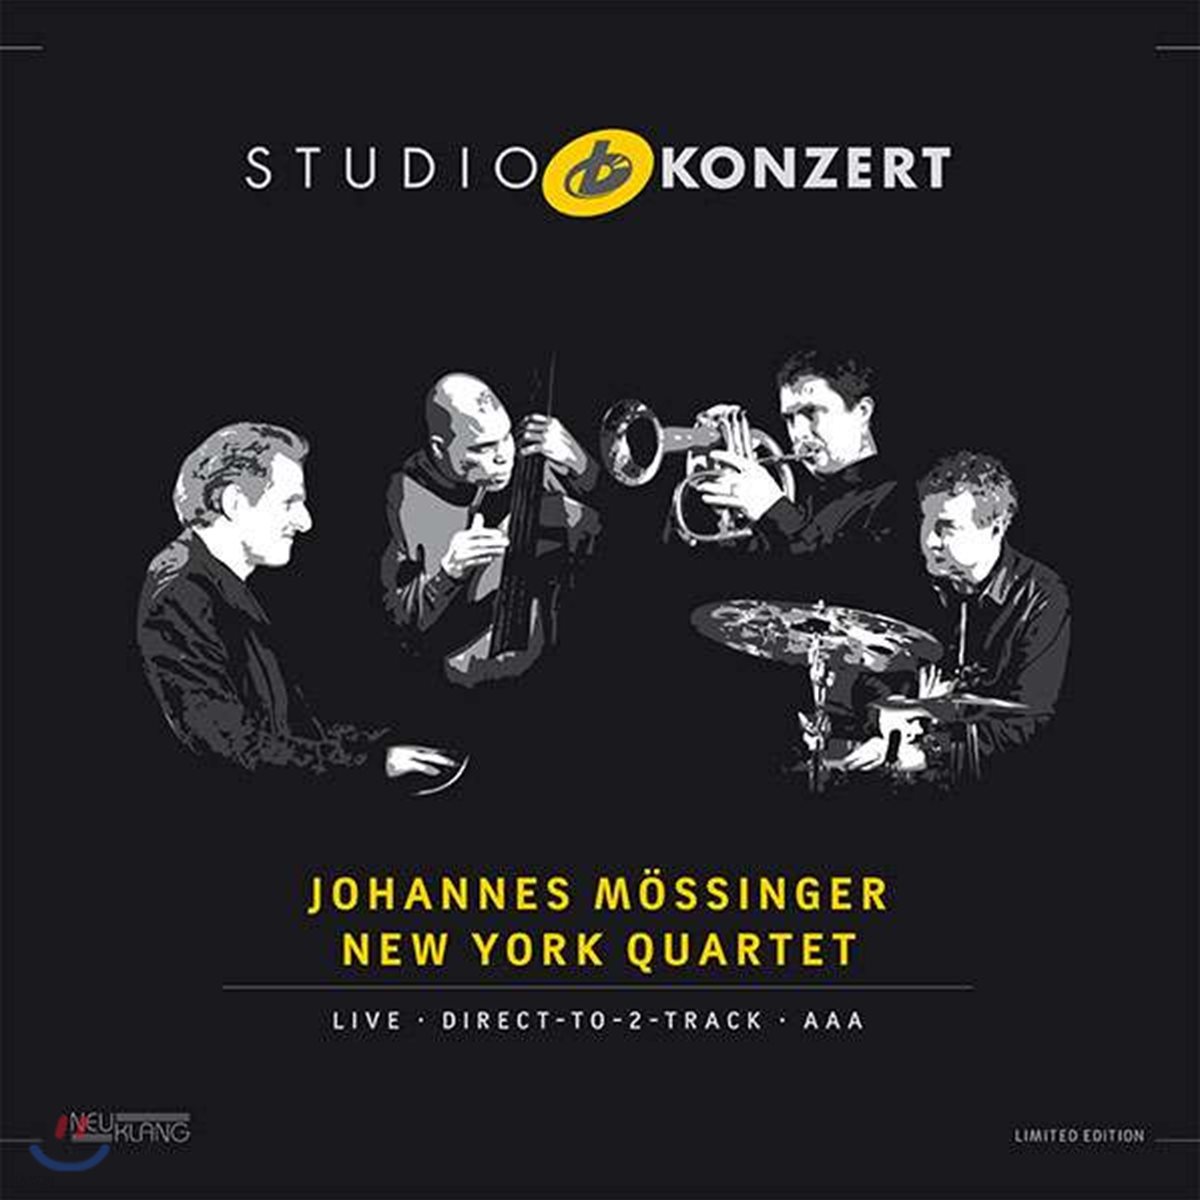 Johannes Mossinger New York Quartet - Studio Konzert 요하네스 뫼싱어 뉴욕 쿼텟 - 스튜디오 콘서트 [Limited Edition LP]